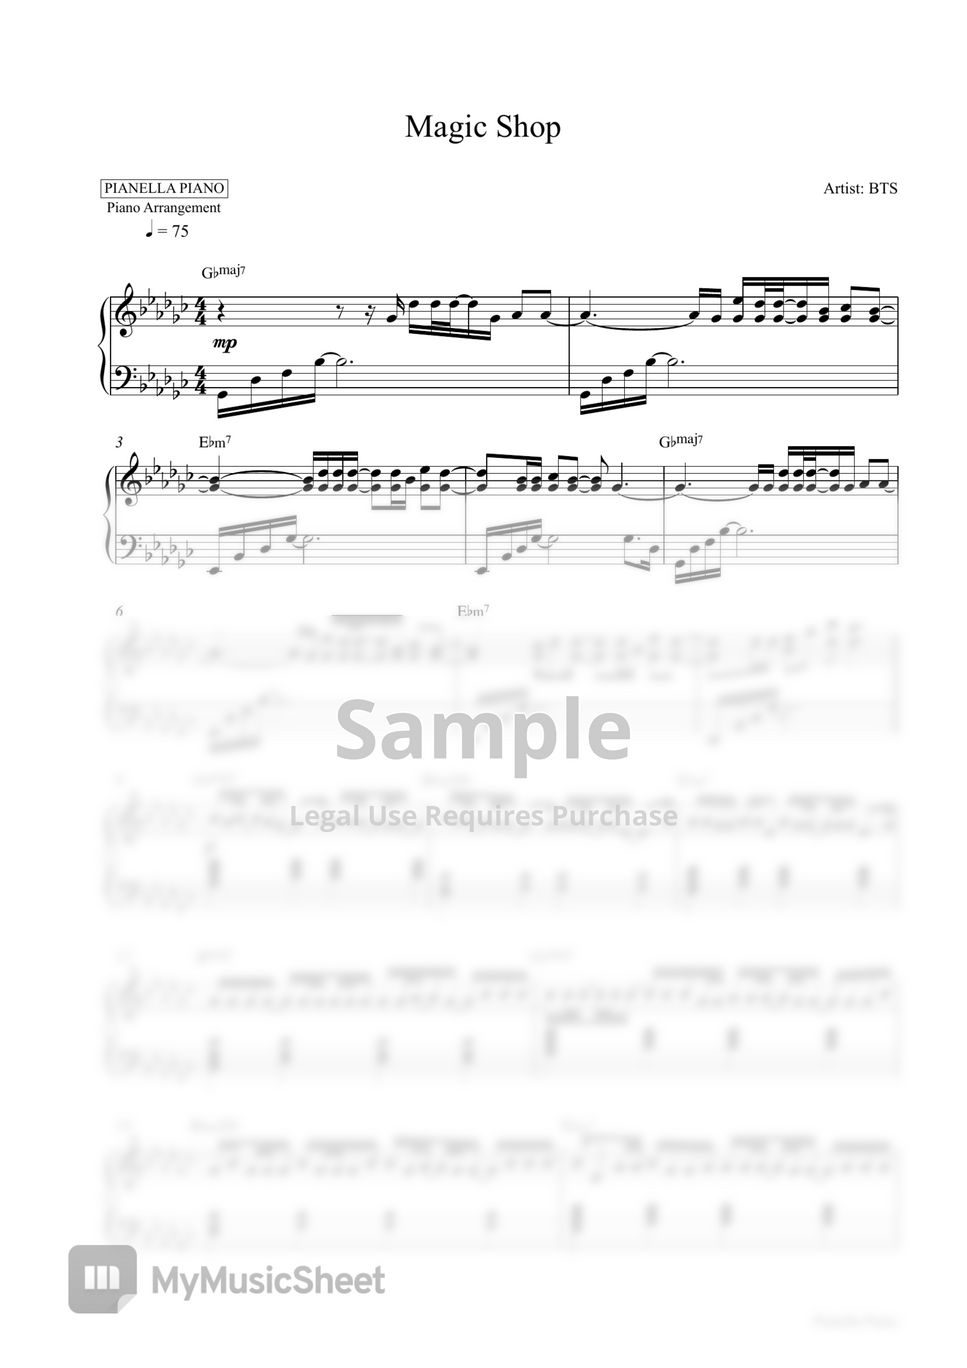 BTS - Magic Shop (Piano Sheet) by Pianella Piano